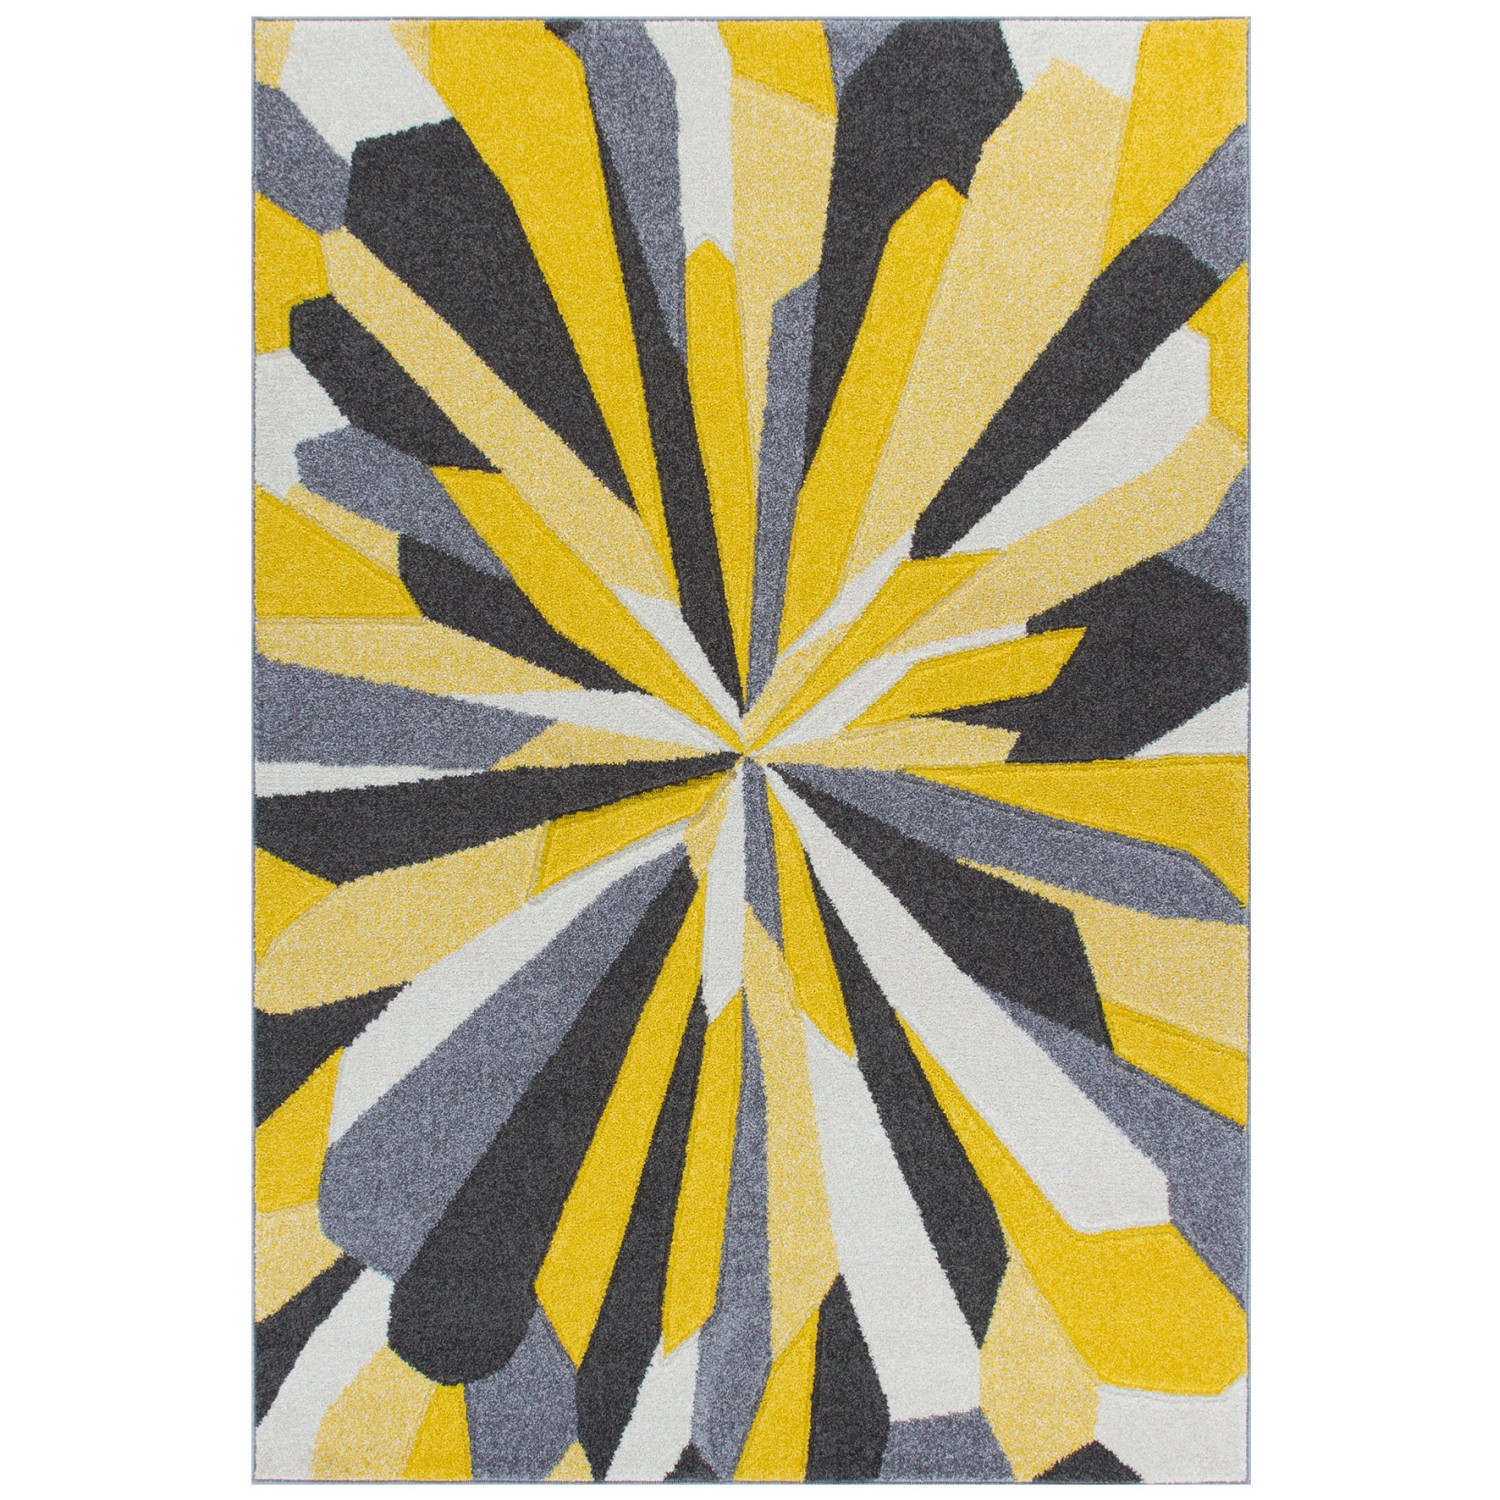 Portland Abstract Rug - 3337A Yellow Grey Cream